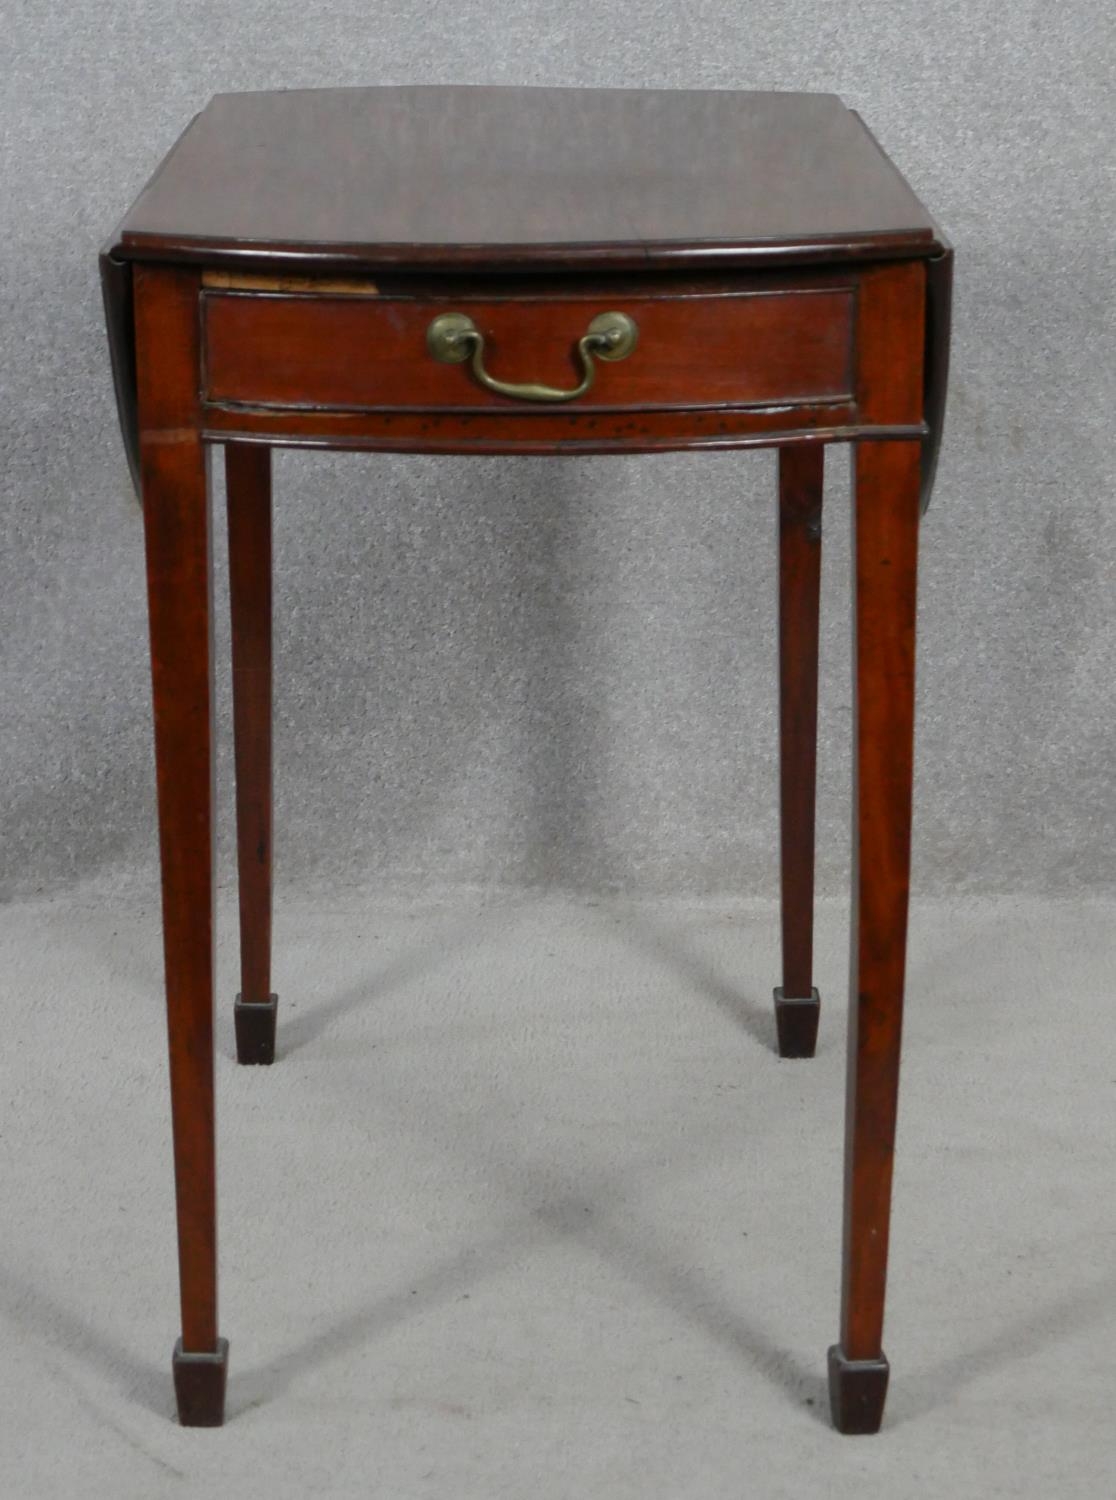 A 19th century mahogany Pembroke table with ebony and satinwood stringing raised on slender square